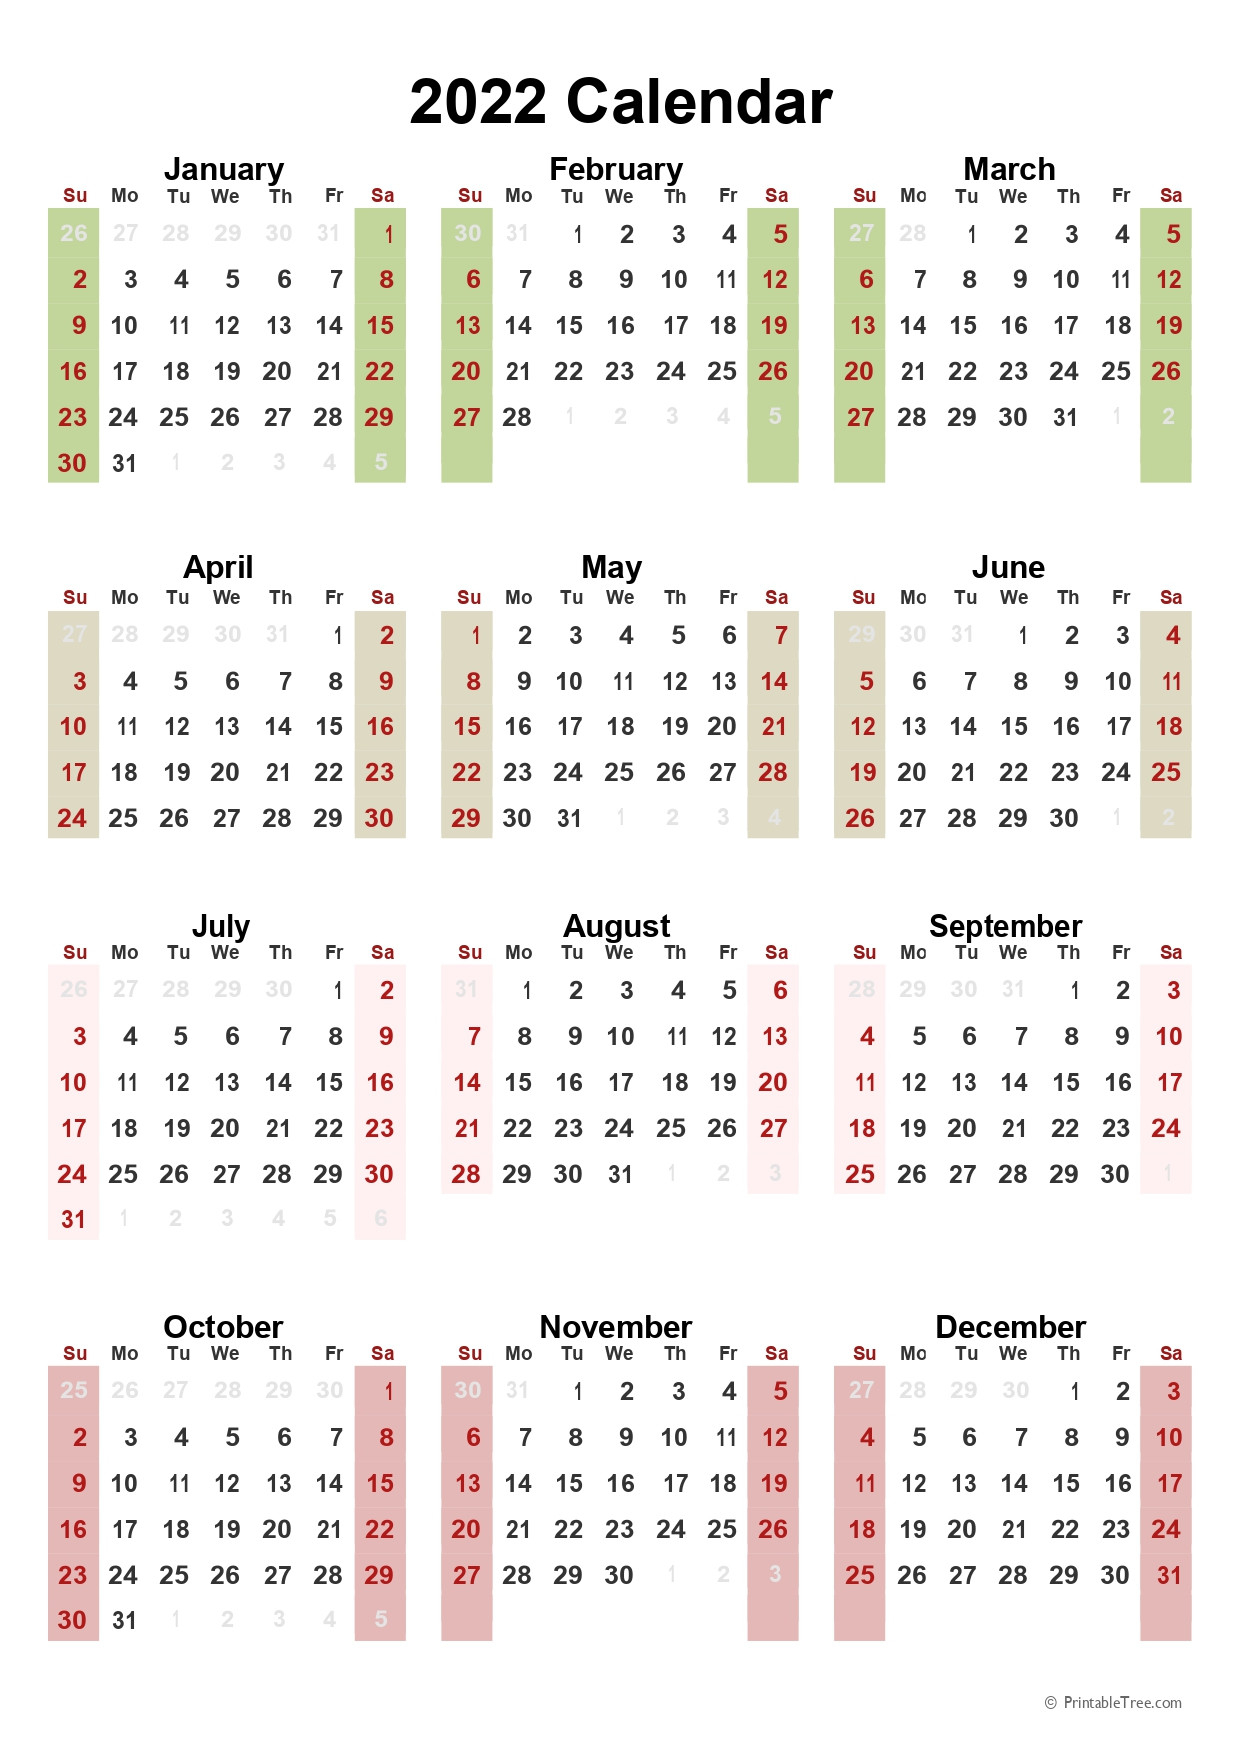 2022 Calendar Printable One Page - Printable 2022 Calendar One Page-Printable 2 Year Calendar 2021 And 2022